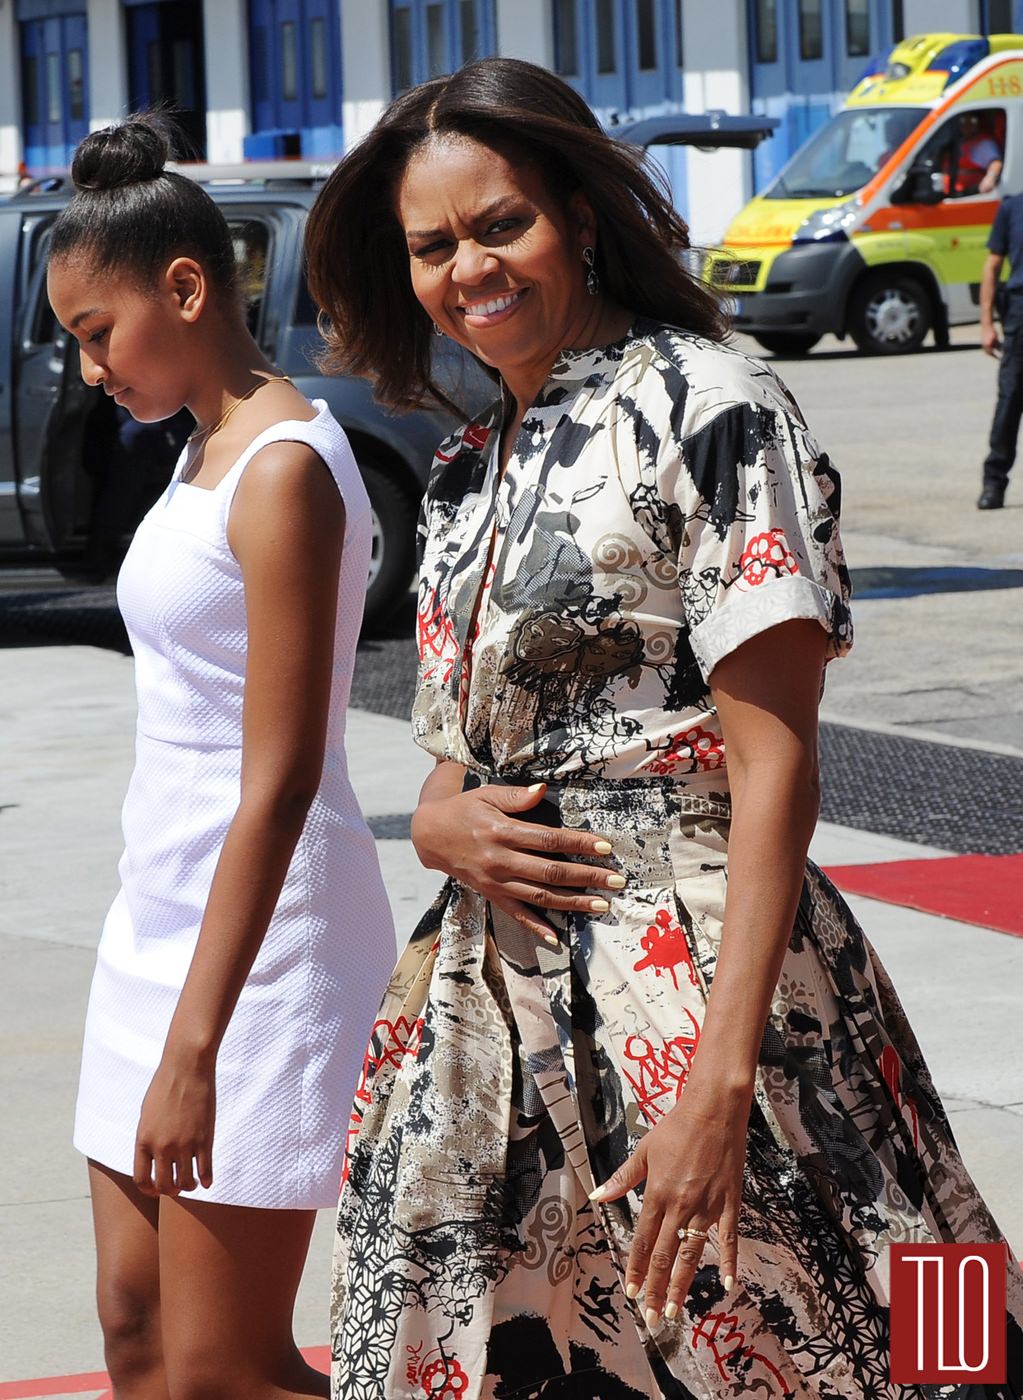 Michelle-Obama-Venice-Europe-Trip-Donna-Karan-Fashion-Tom-Lorenzo-Site-TLO (1)